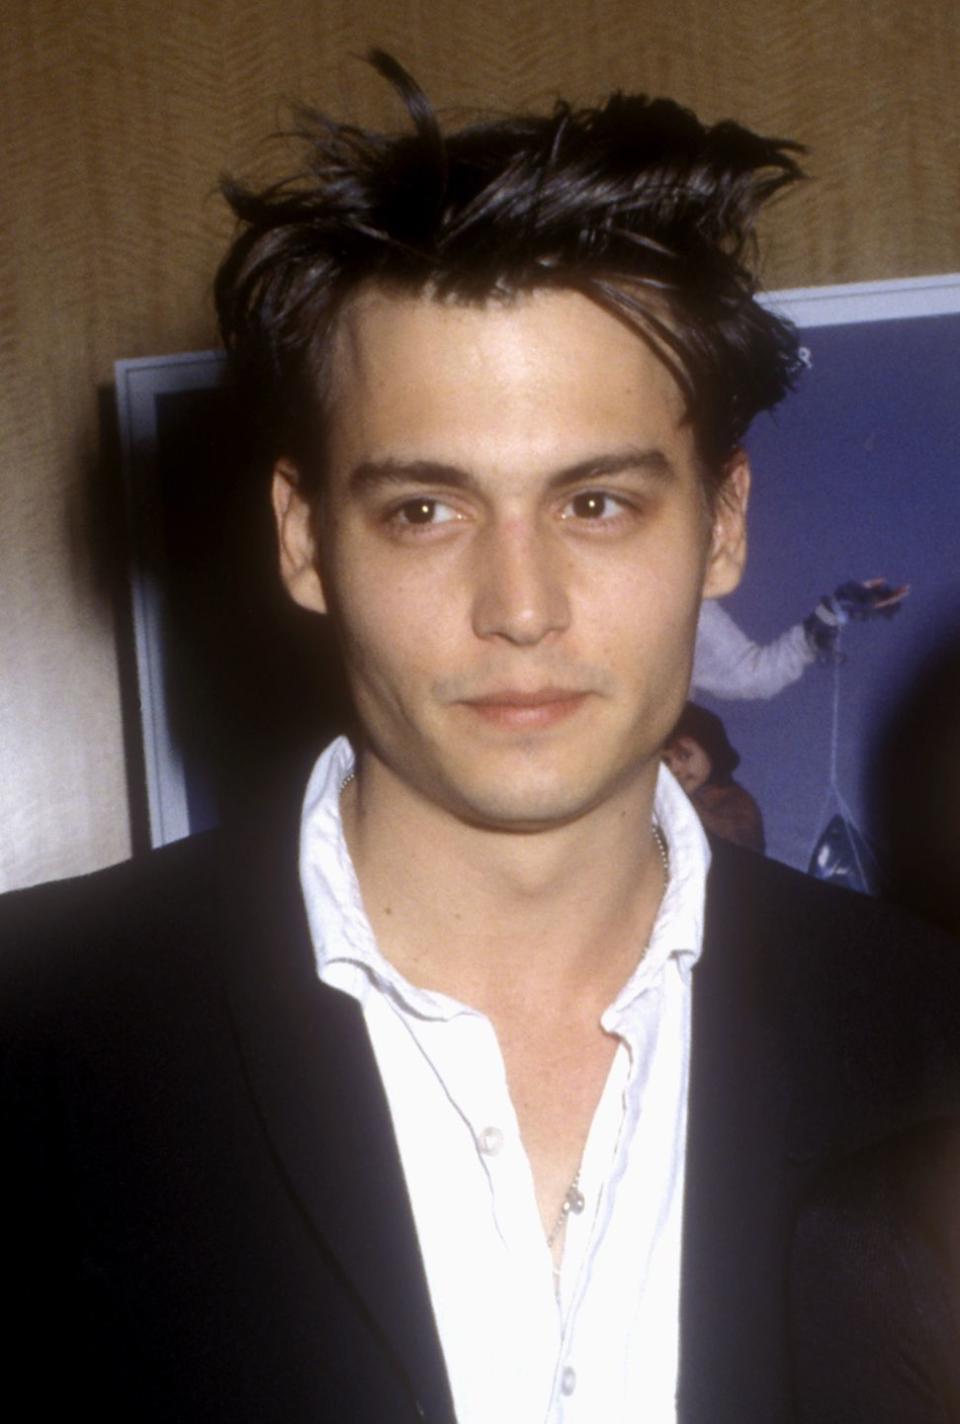 THEN: Johnny Depp